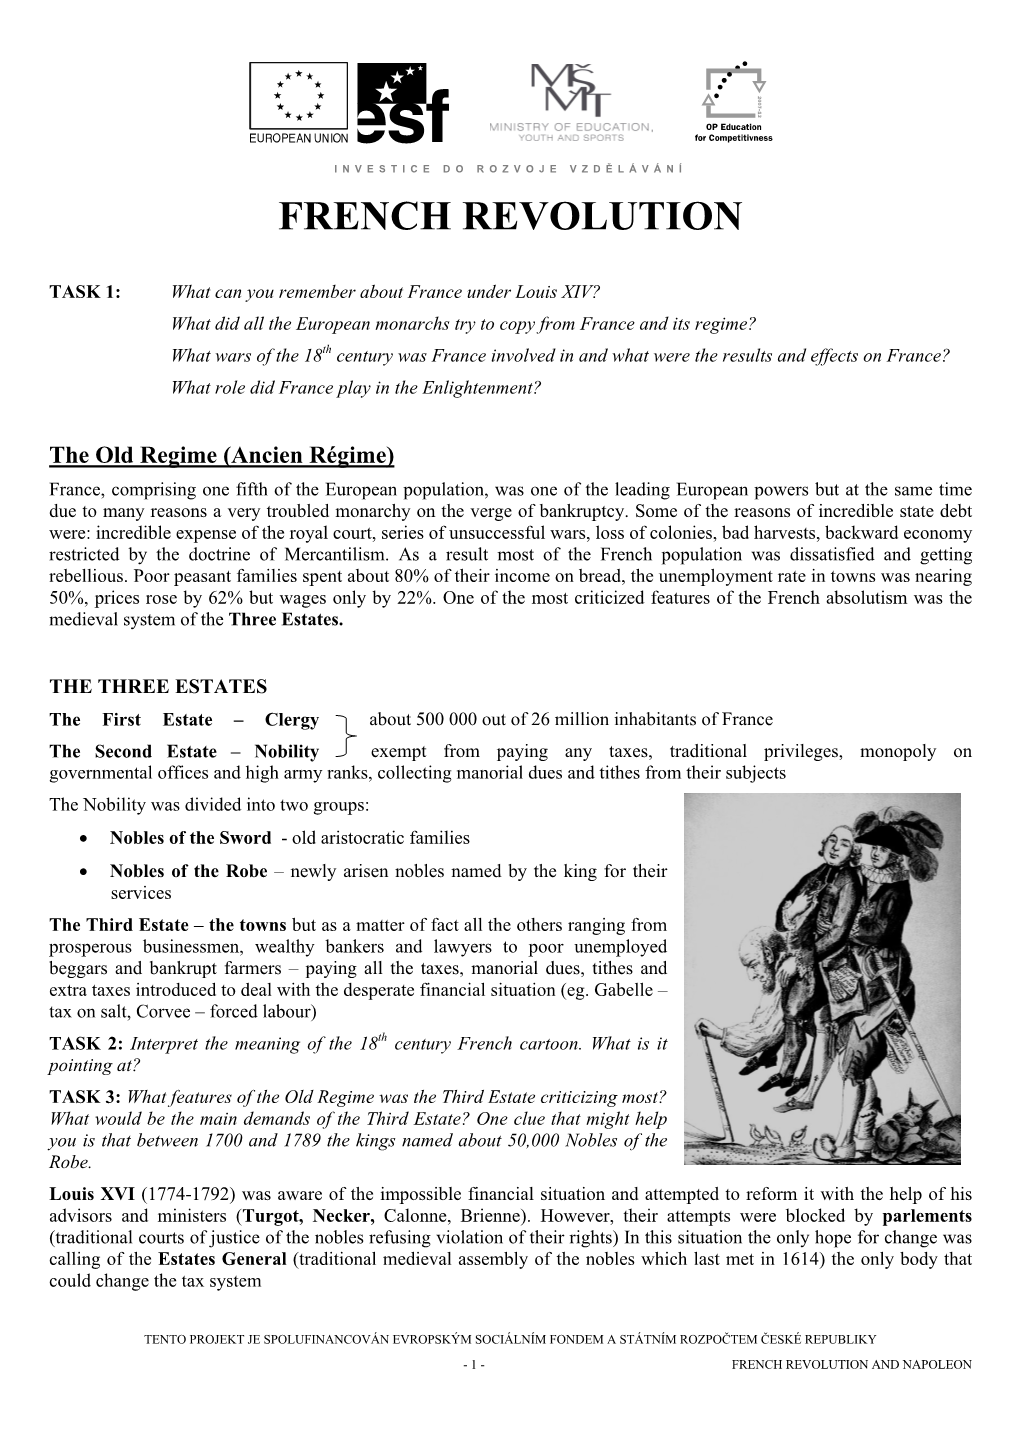 French Revolution